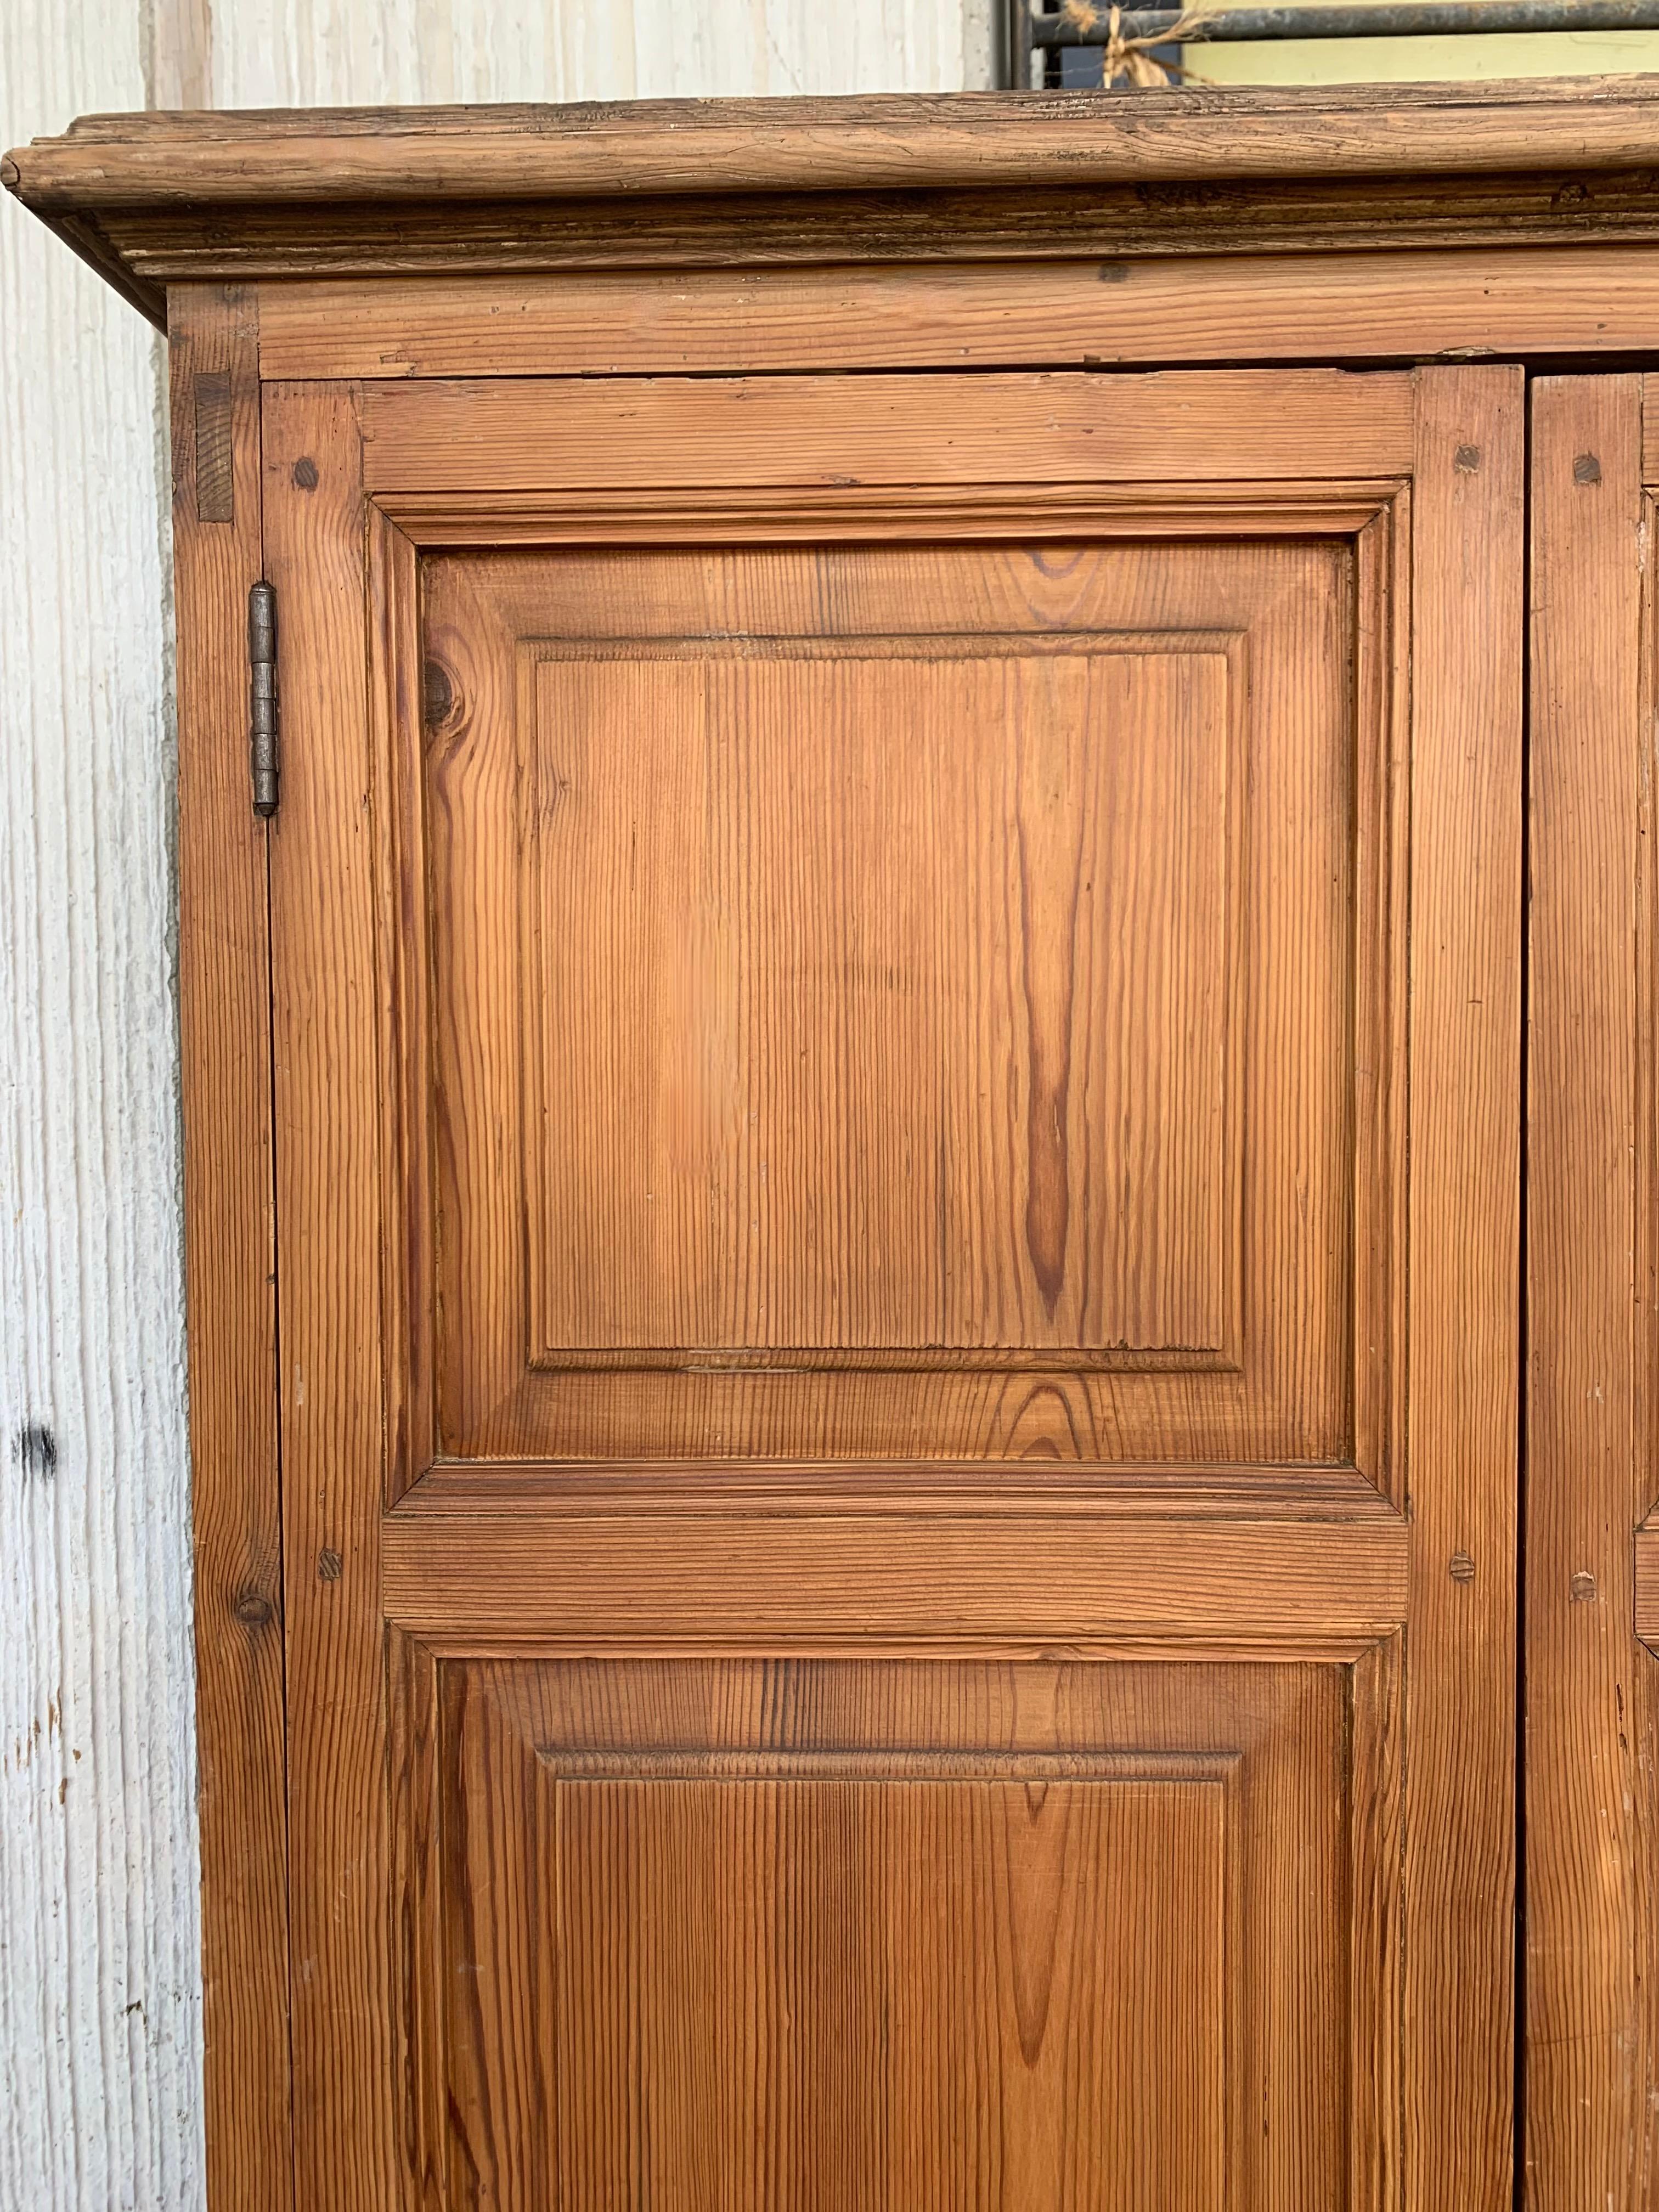 19th Century Narrow Cupboard or Cabinet, Pine, Castillian Influence, Restored In Good Condition For Sale In Miami, FL